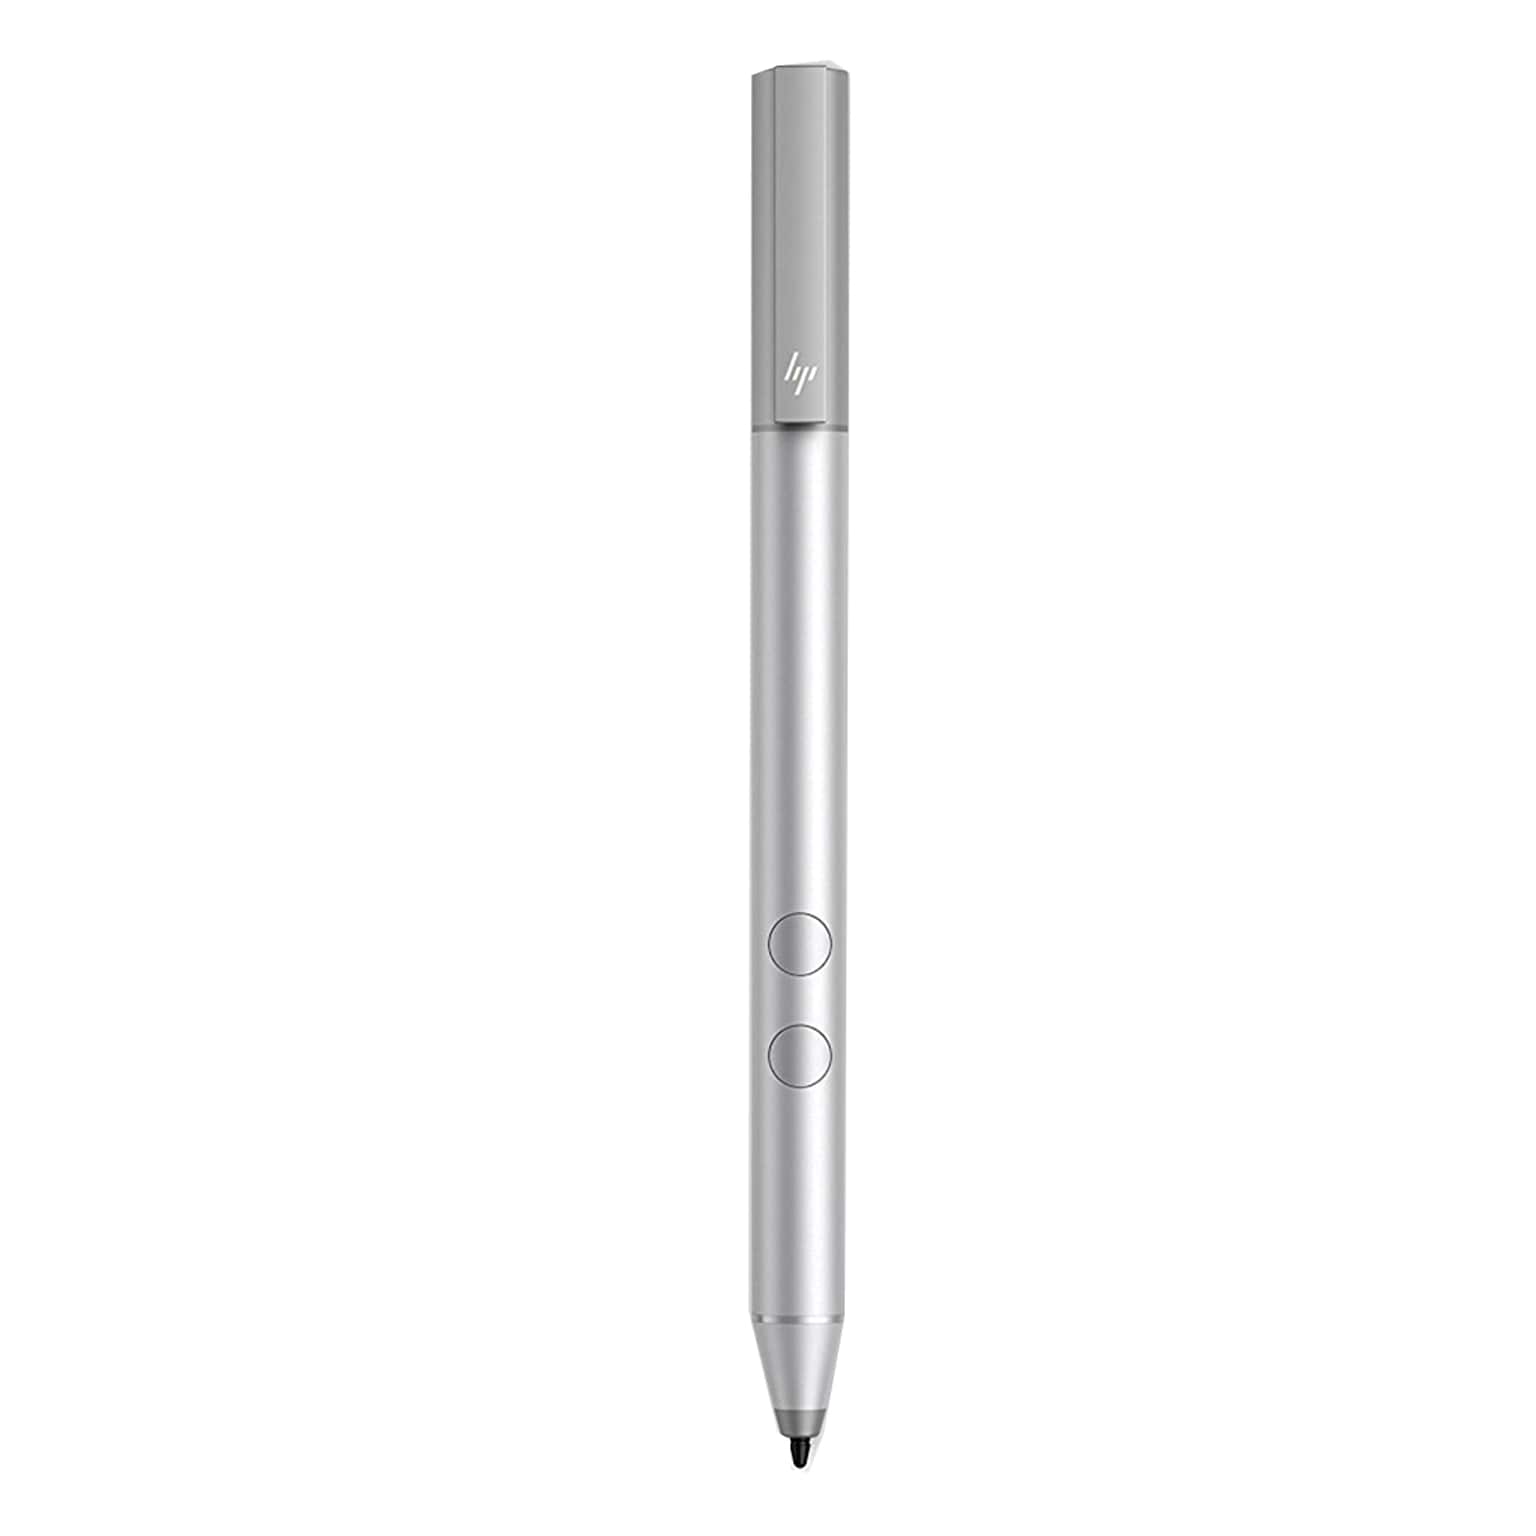 HP Digital Stylus Pen for Envy x360/Pavilion x360/Spectre x360 Laptops, Silver (HP1MR94AA)